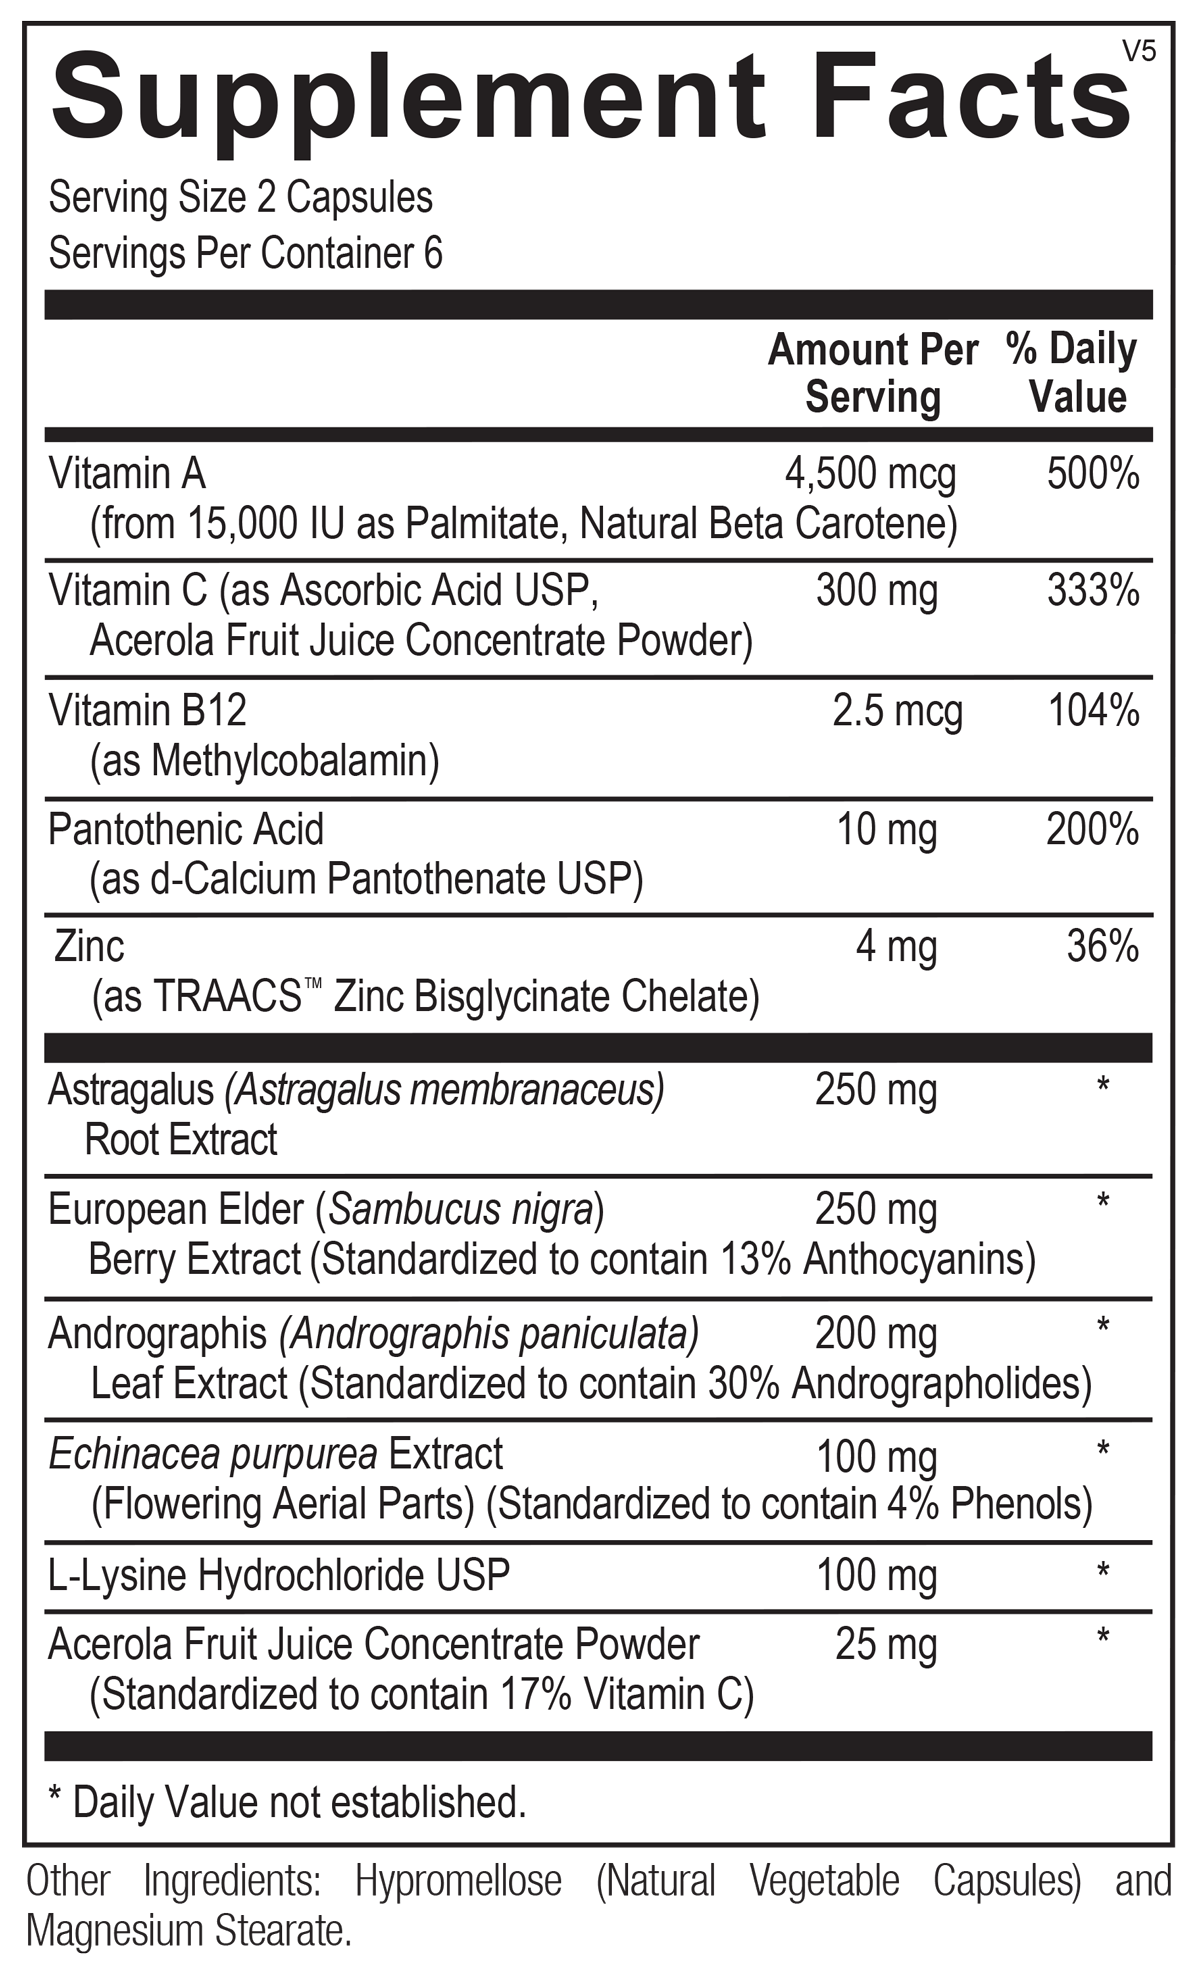 Ortho Molecular Viracid Blister Pack caps supplement facts. Photo of the Viracid supplement facts from the bottle.